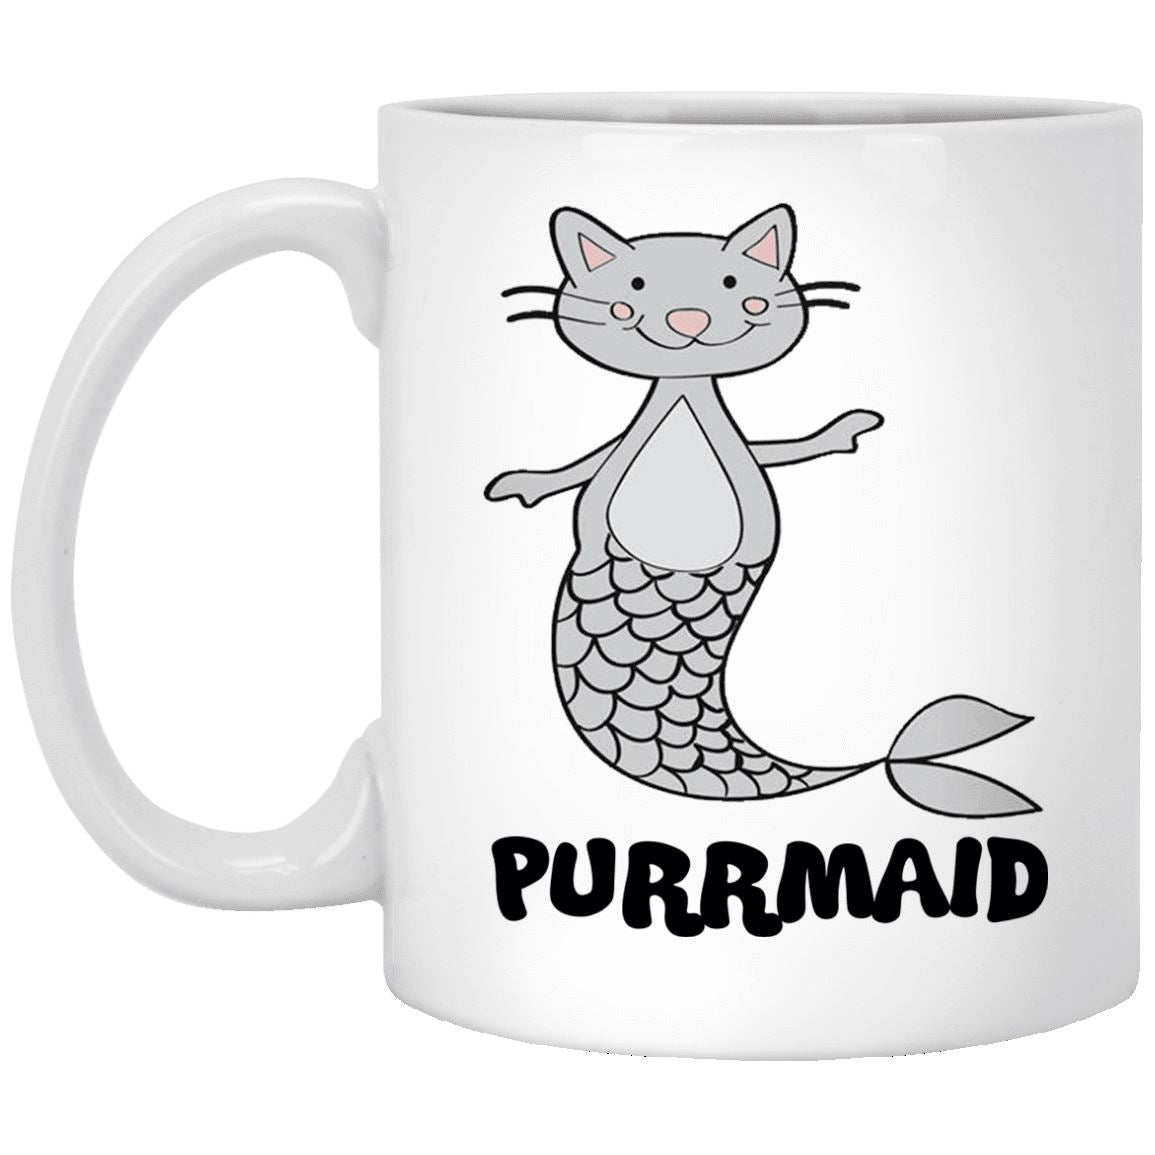 Cat Mug - Purrmaid - CatsForLife